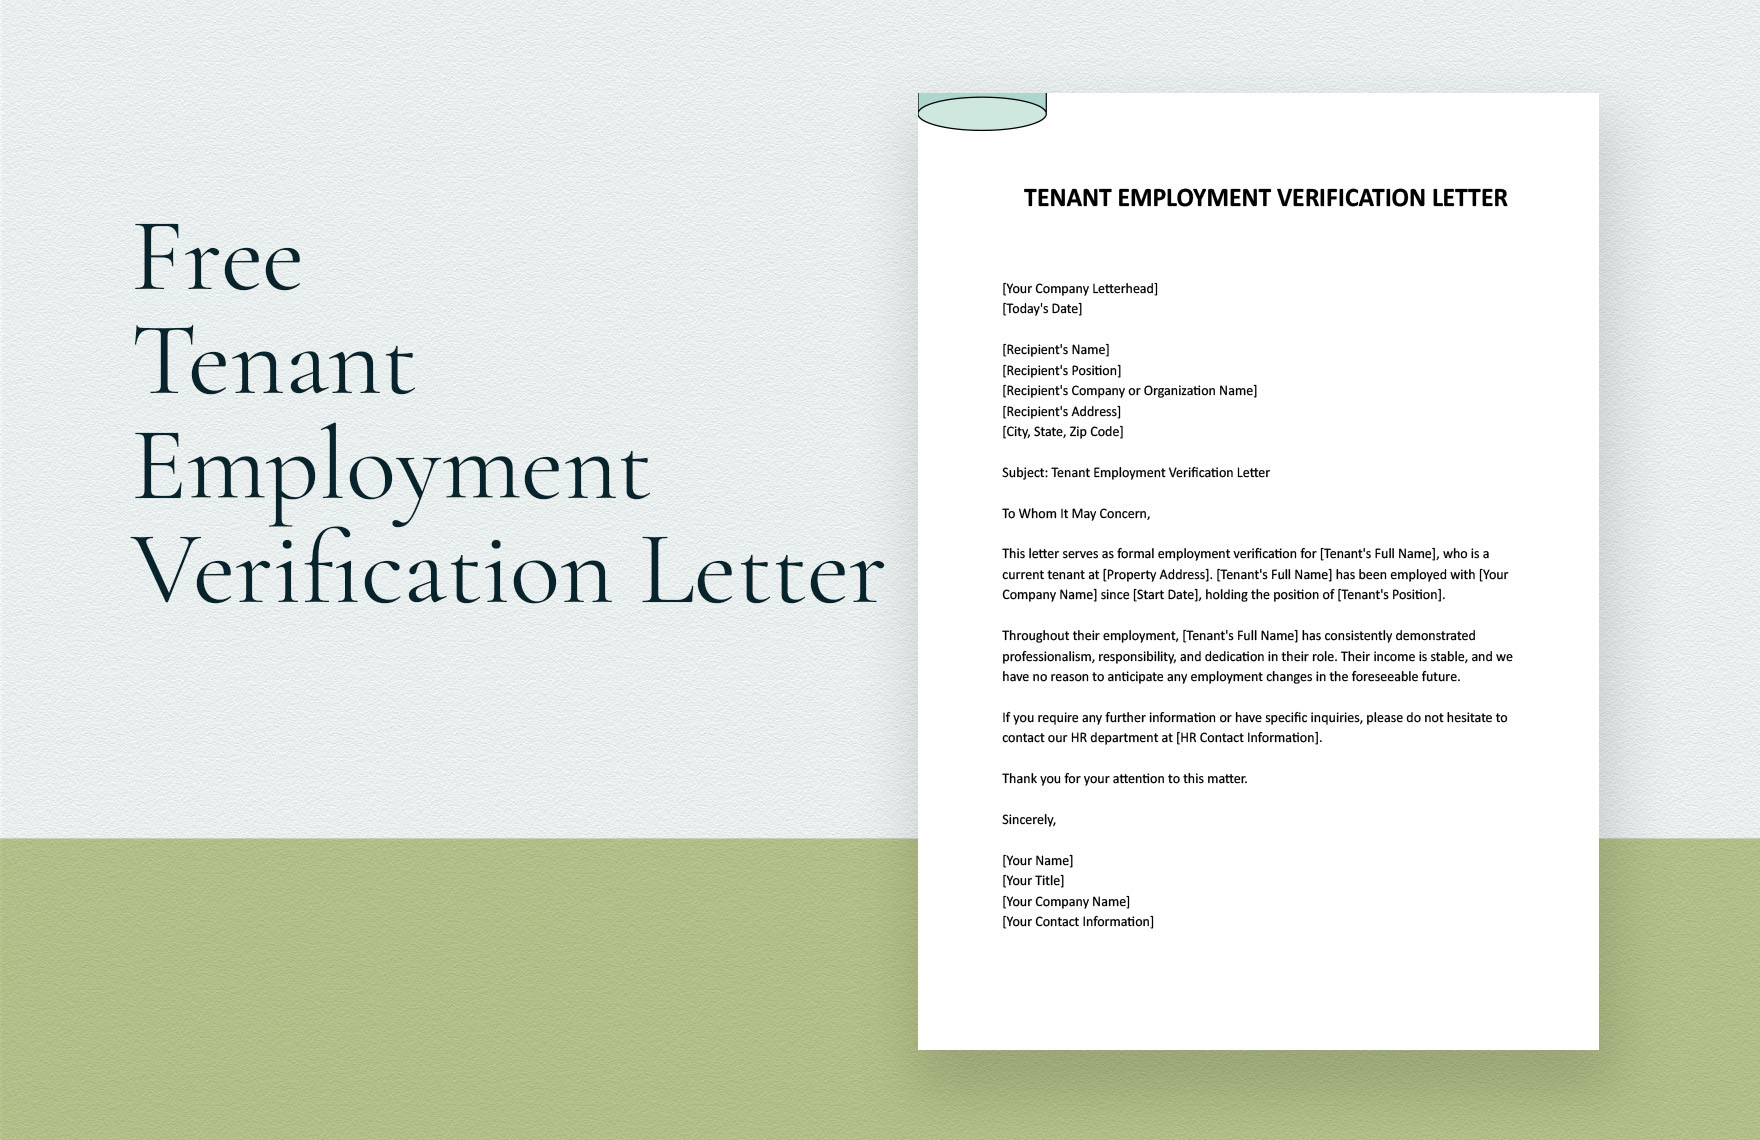 Free Tenant Employment Verification Letter